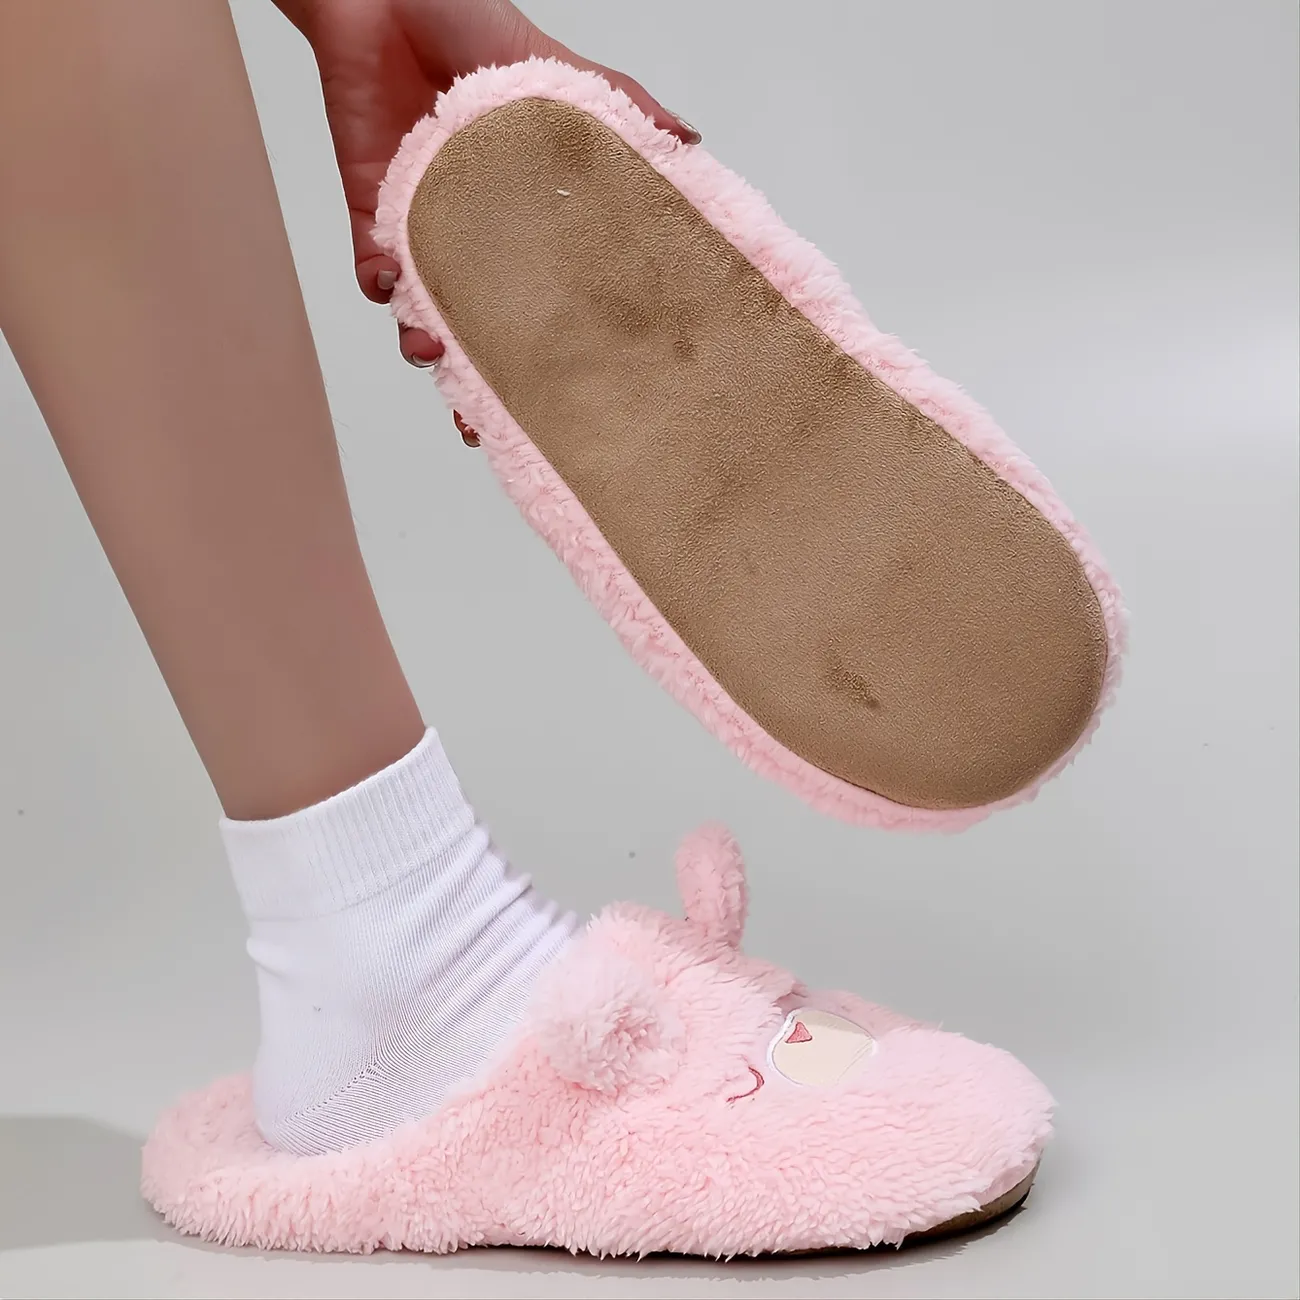 Women's Home Shoes, Indoor Plush Slippers, Cute Cartoon Winter